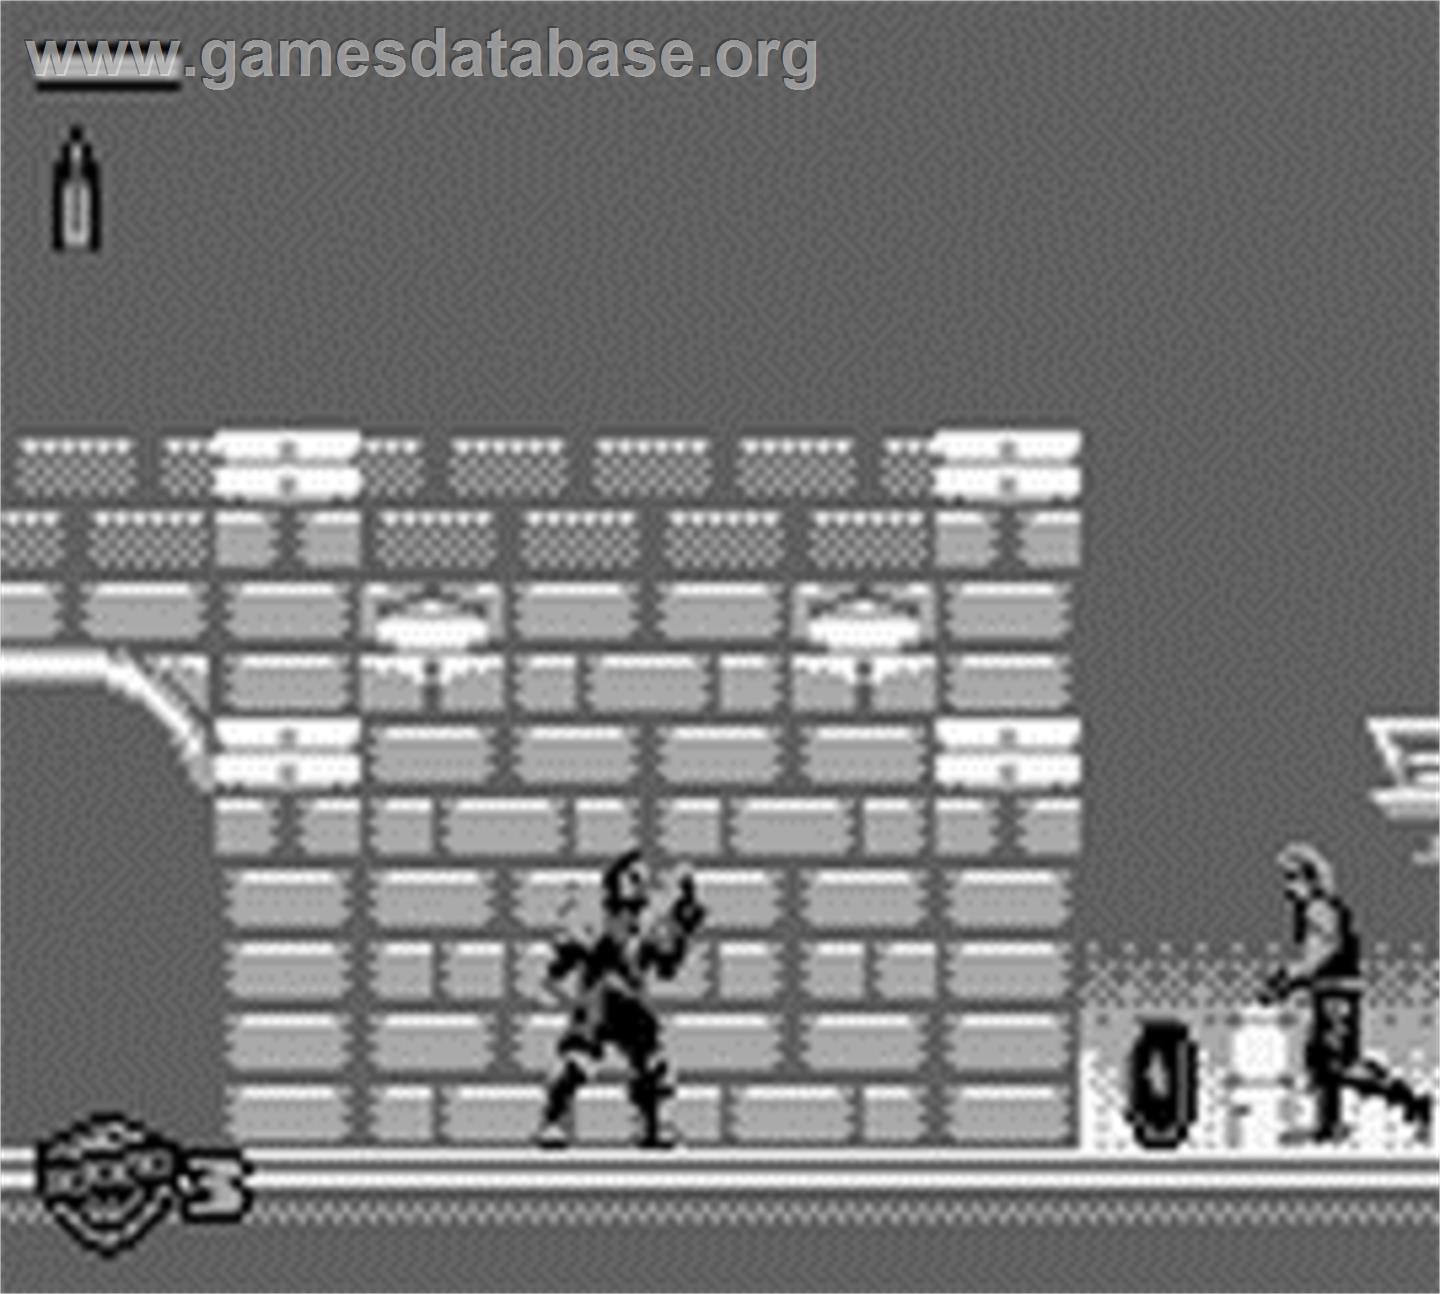 Judge Dredd - Nintendo Game Boy - Artwork - In Game